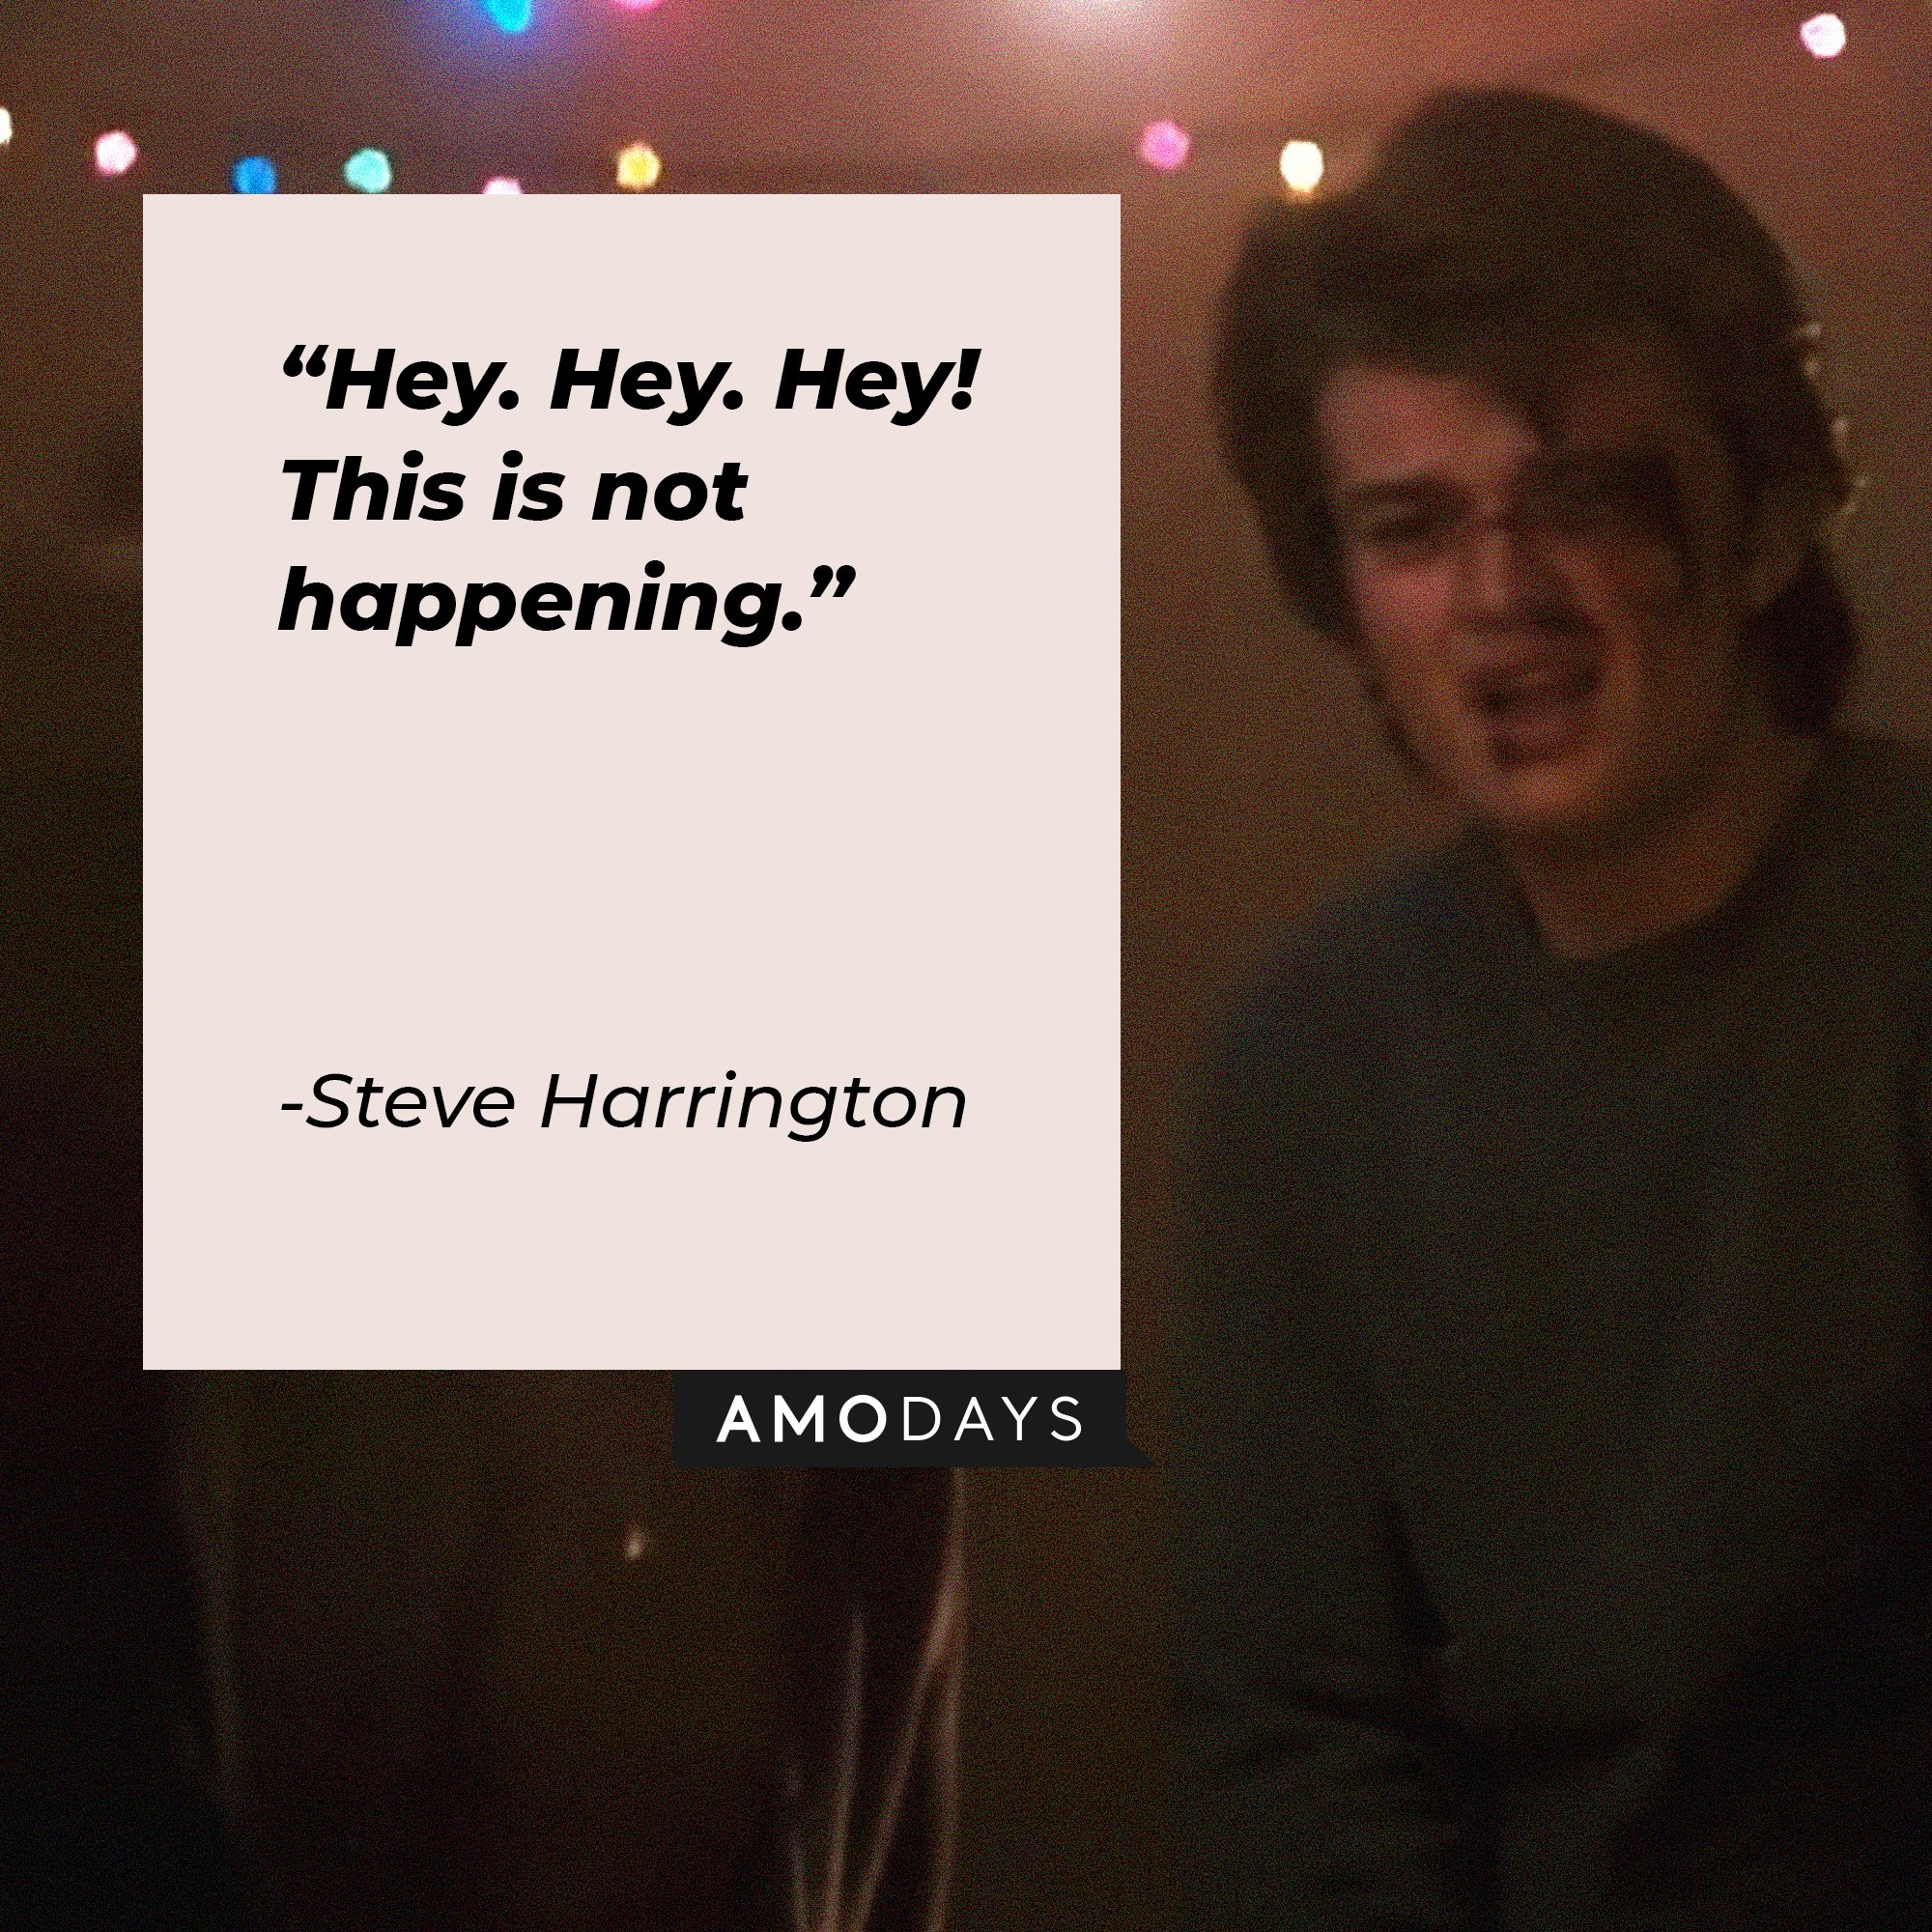  Steve Harrington's quote: "Hey. Hey. Hey! This is not happening." | Image: AmoDays  